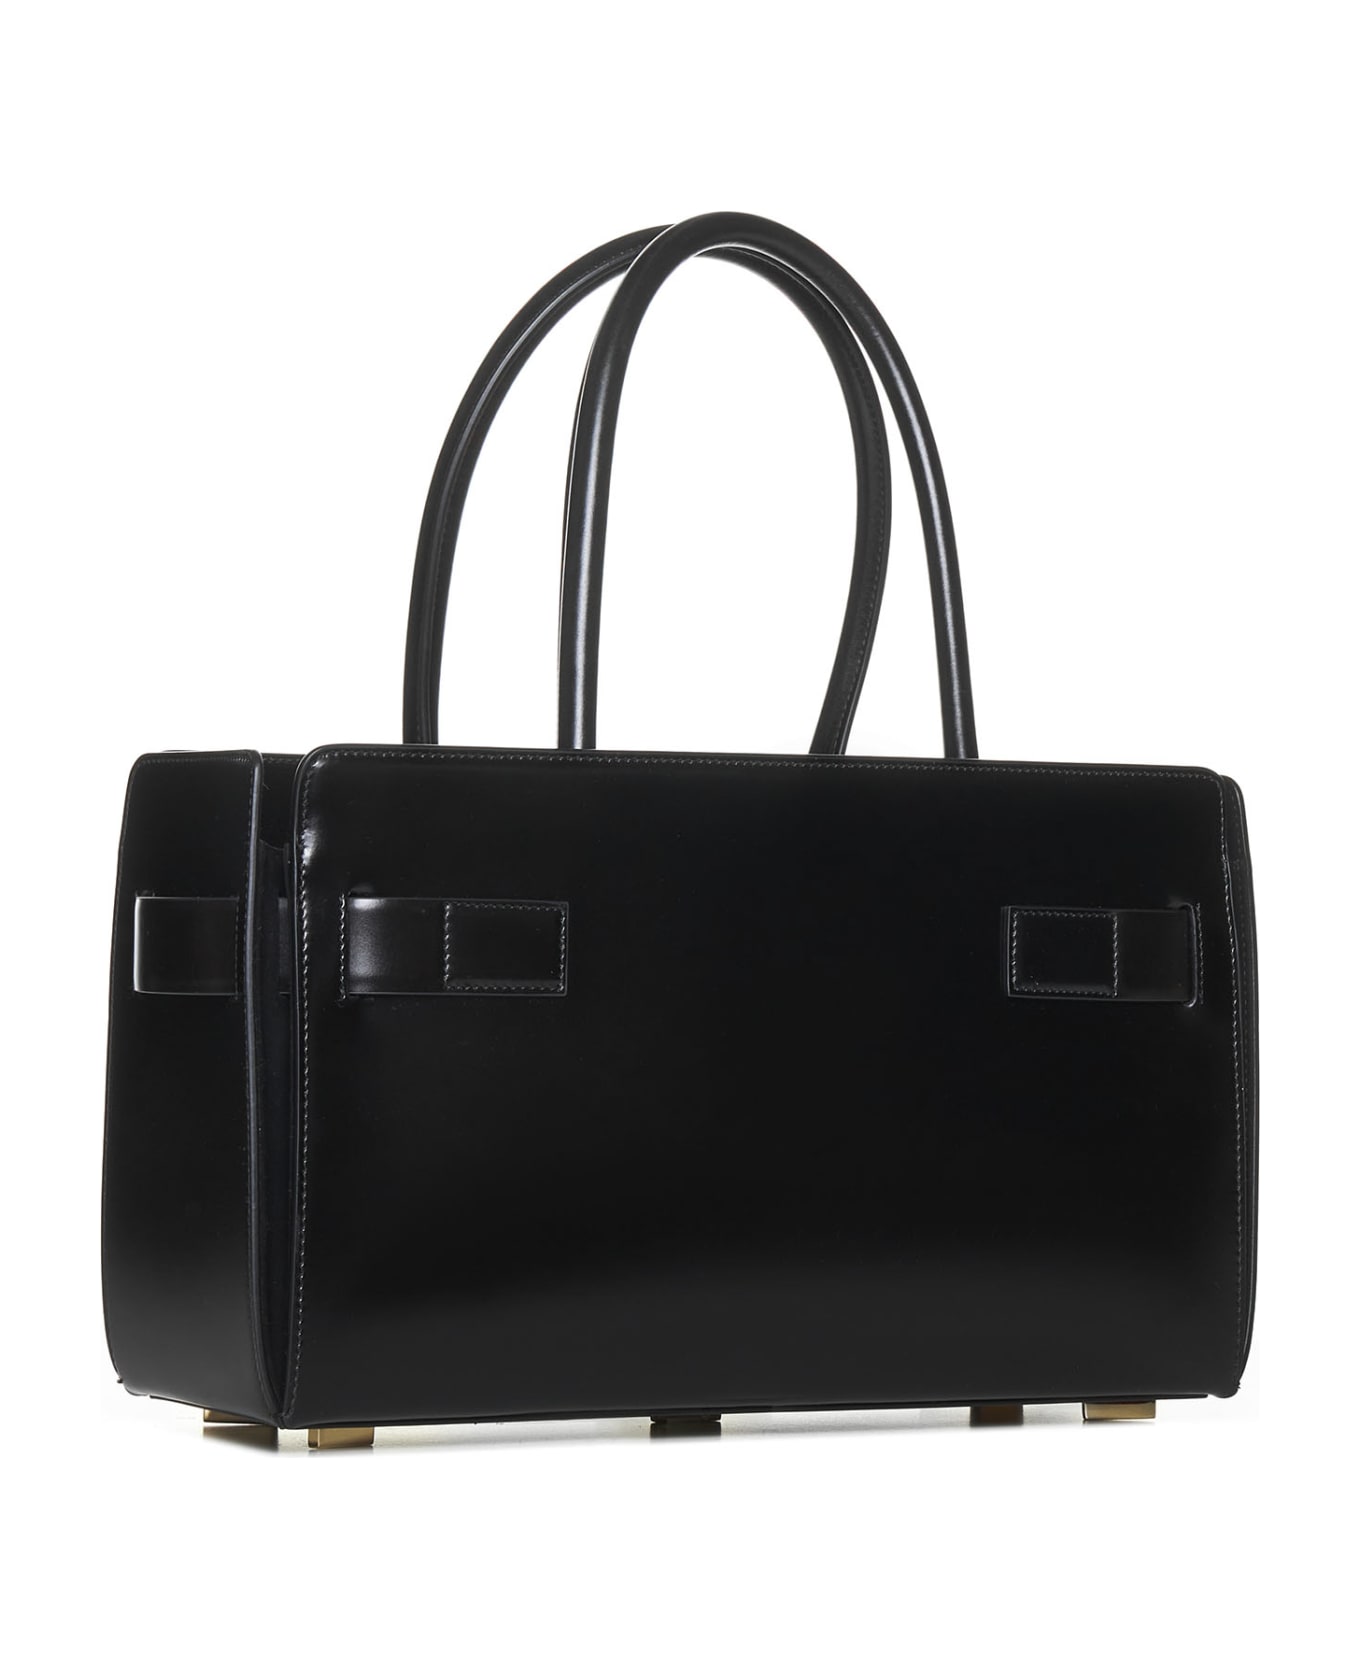 Ferragamo Shoulder Bag - Double black